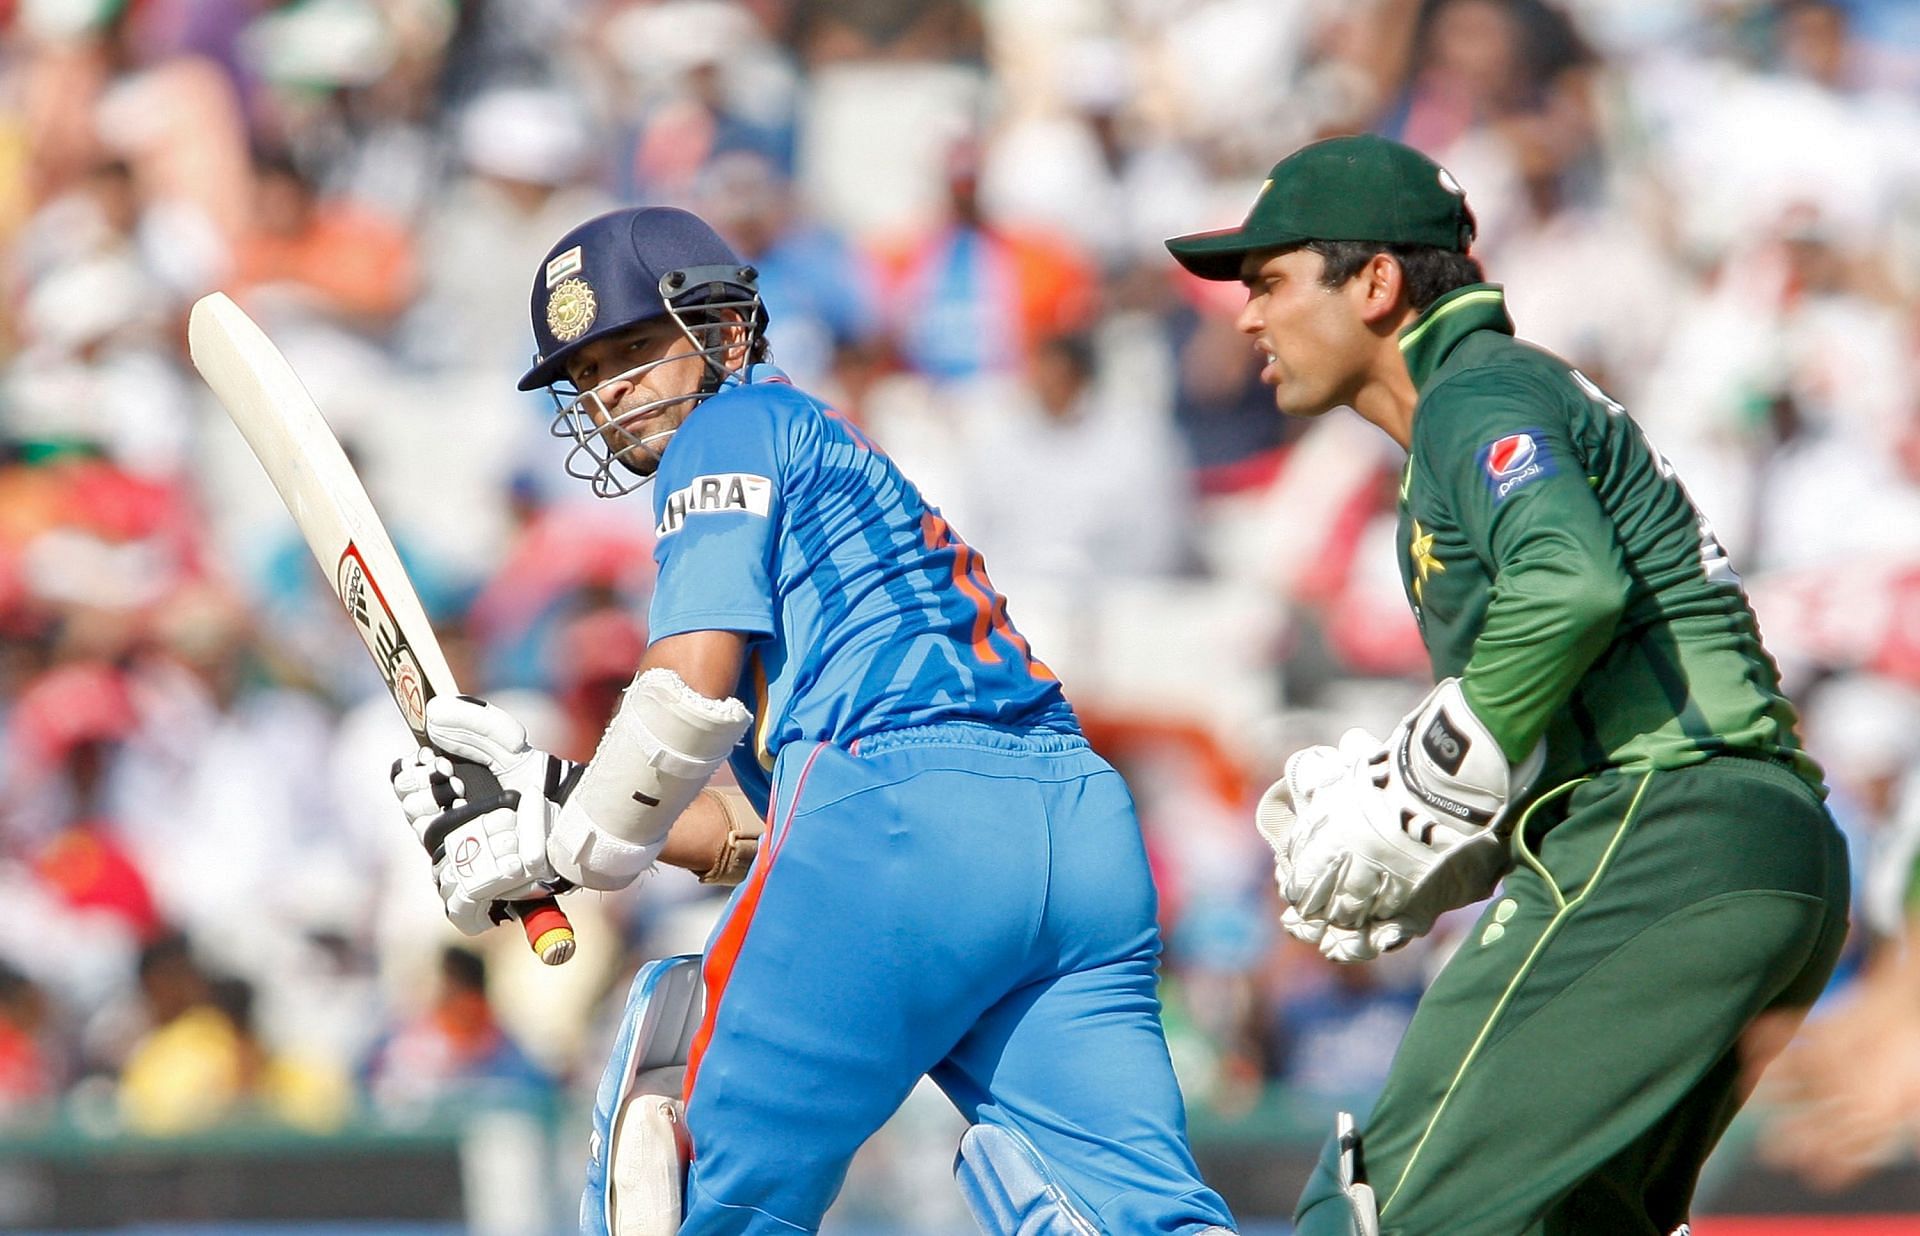 Sachin Tendulkar batting during the 2011 semi-final against Pakistan in Mohali. (Pic: Getty Images)